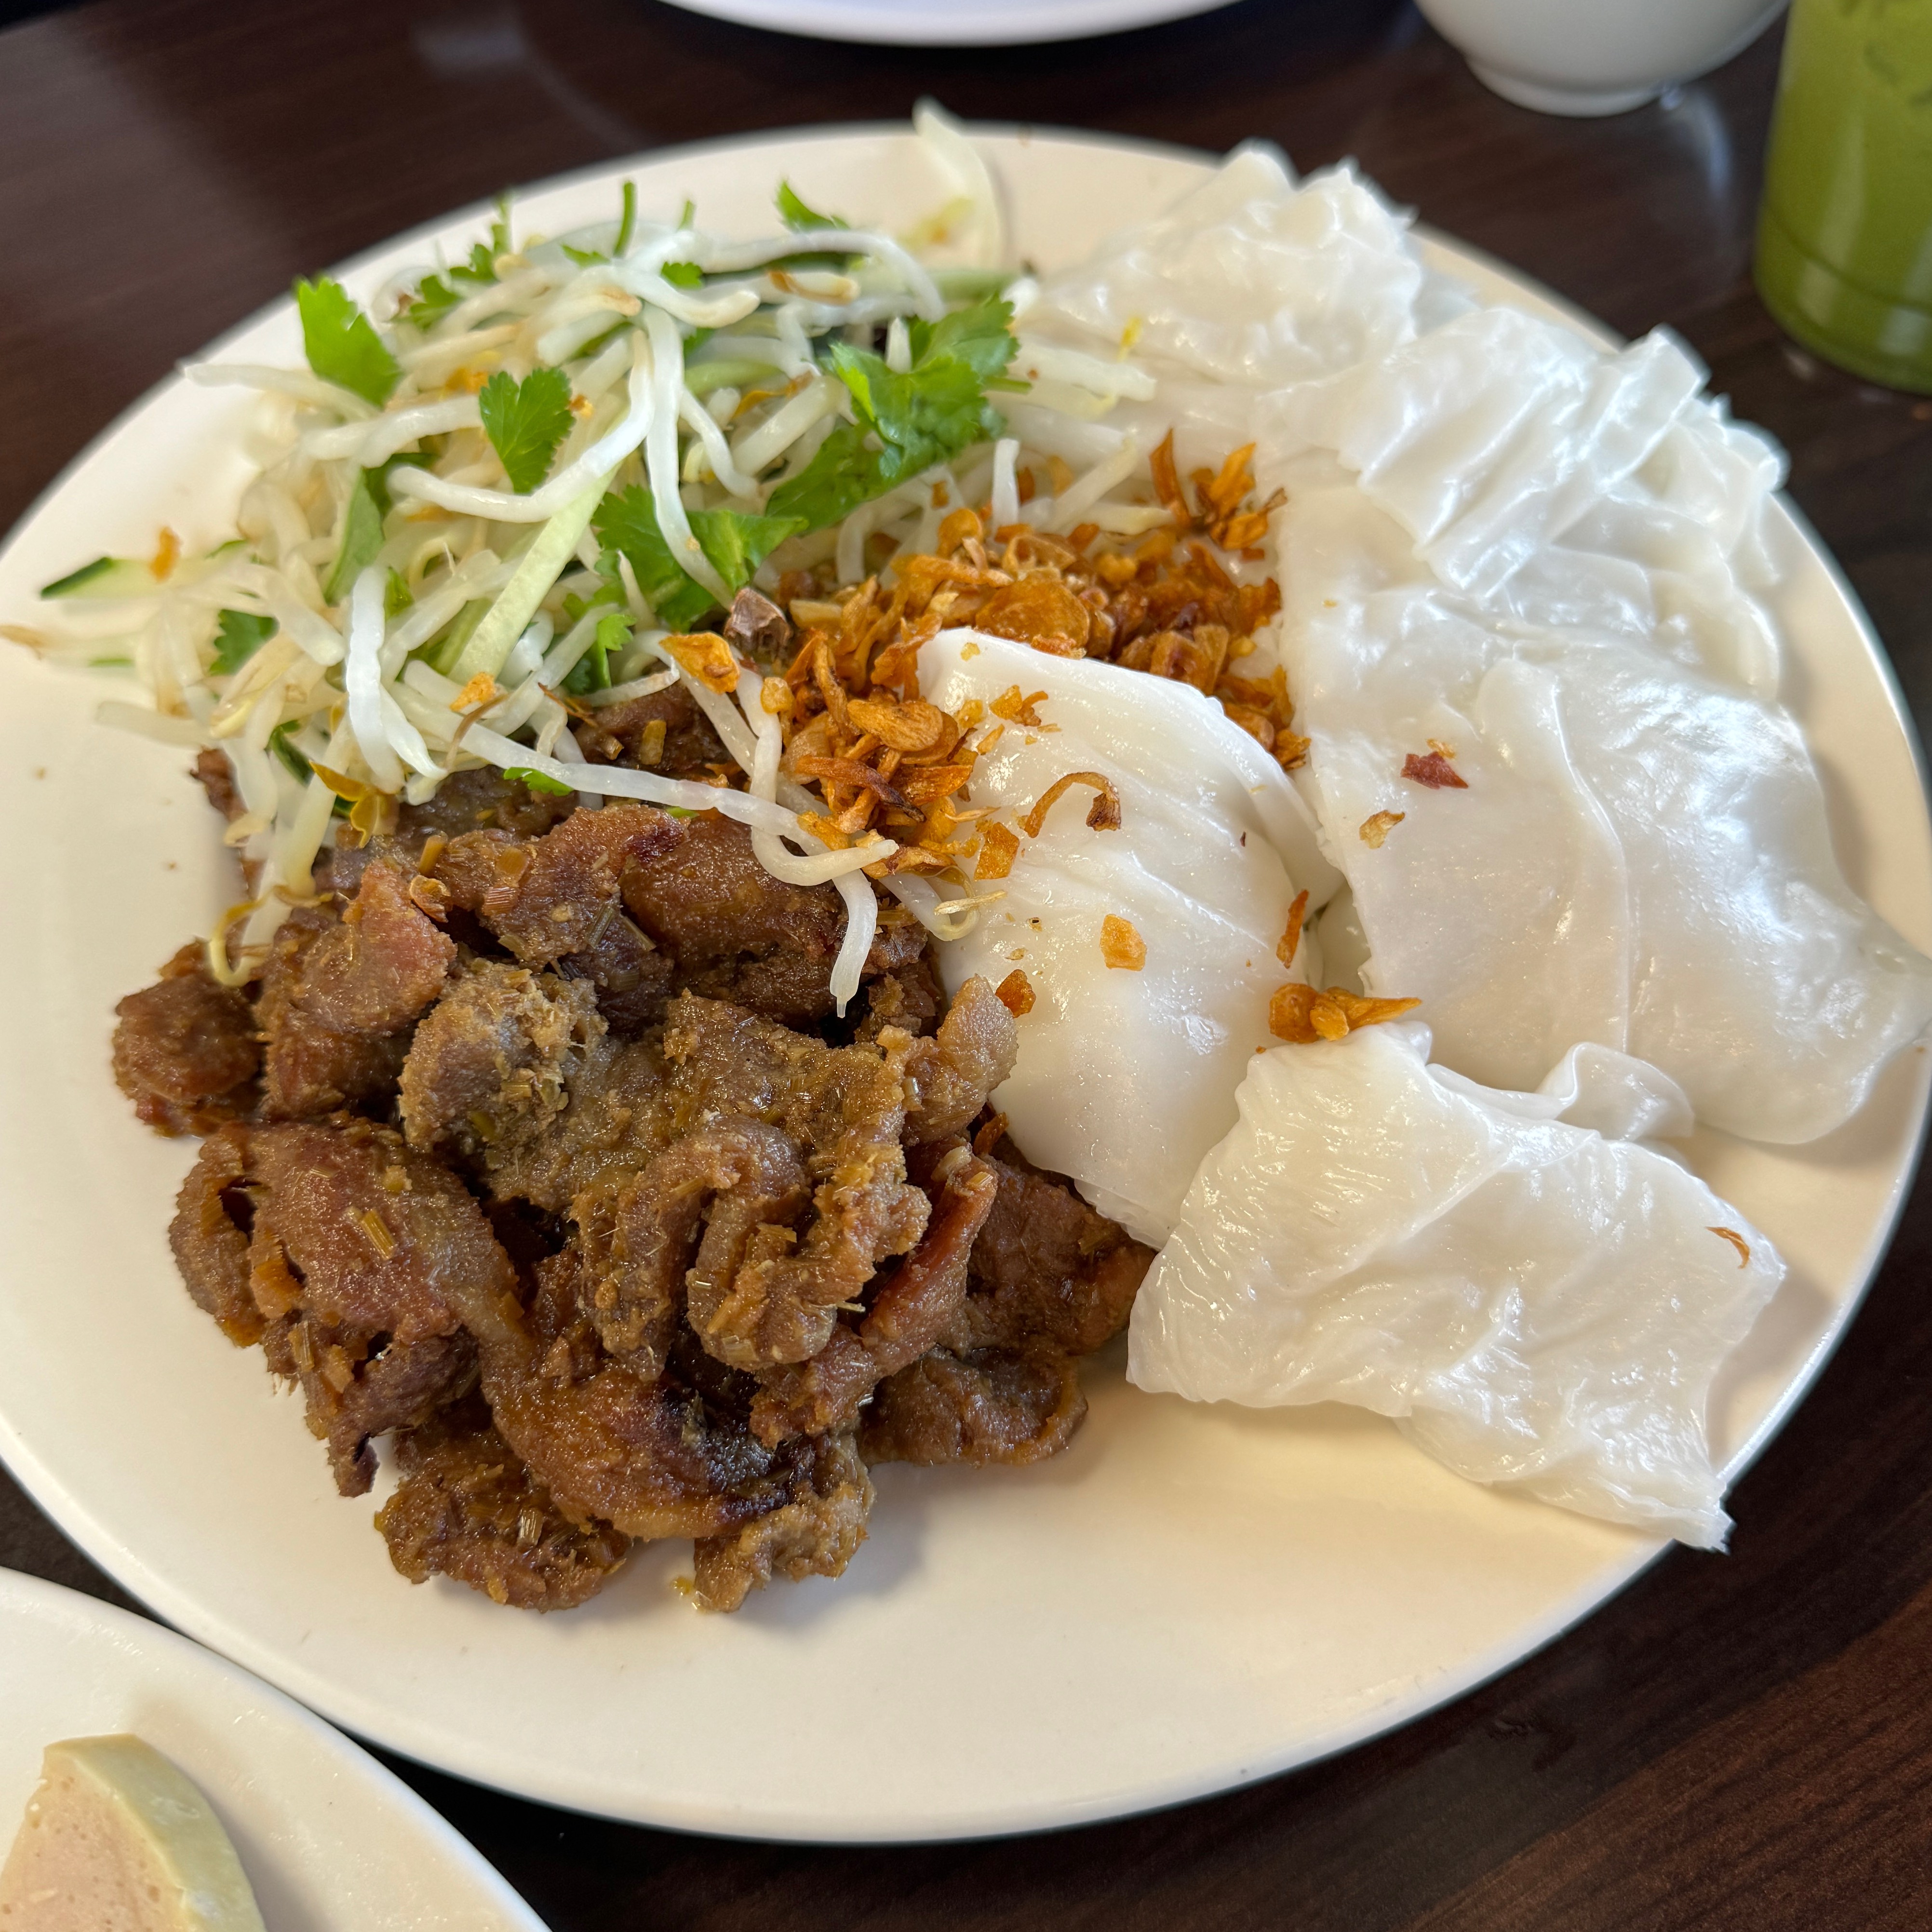 Banh Thanh Tri Thit Nuong $12 at Banh Cuon Luu Luyen on #foodmento http://foodmento.com/place/12128